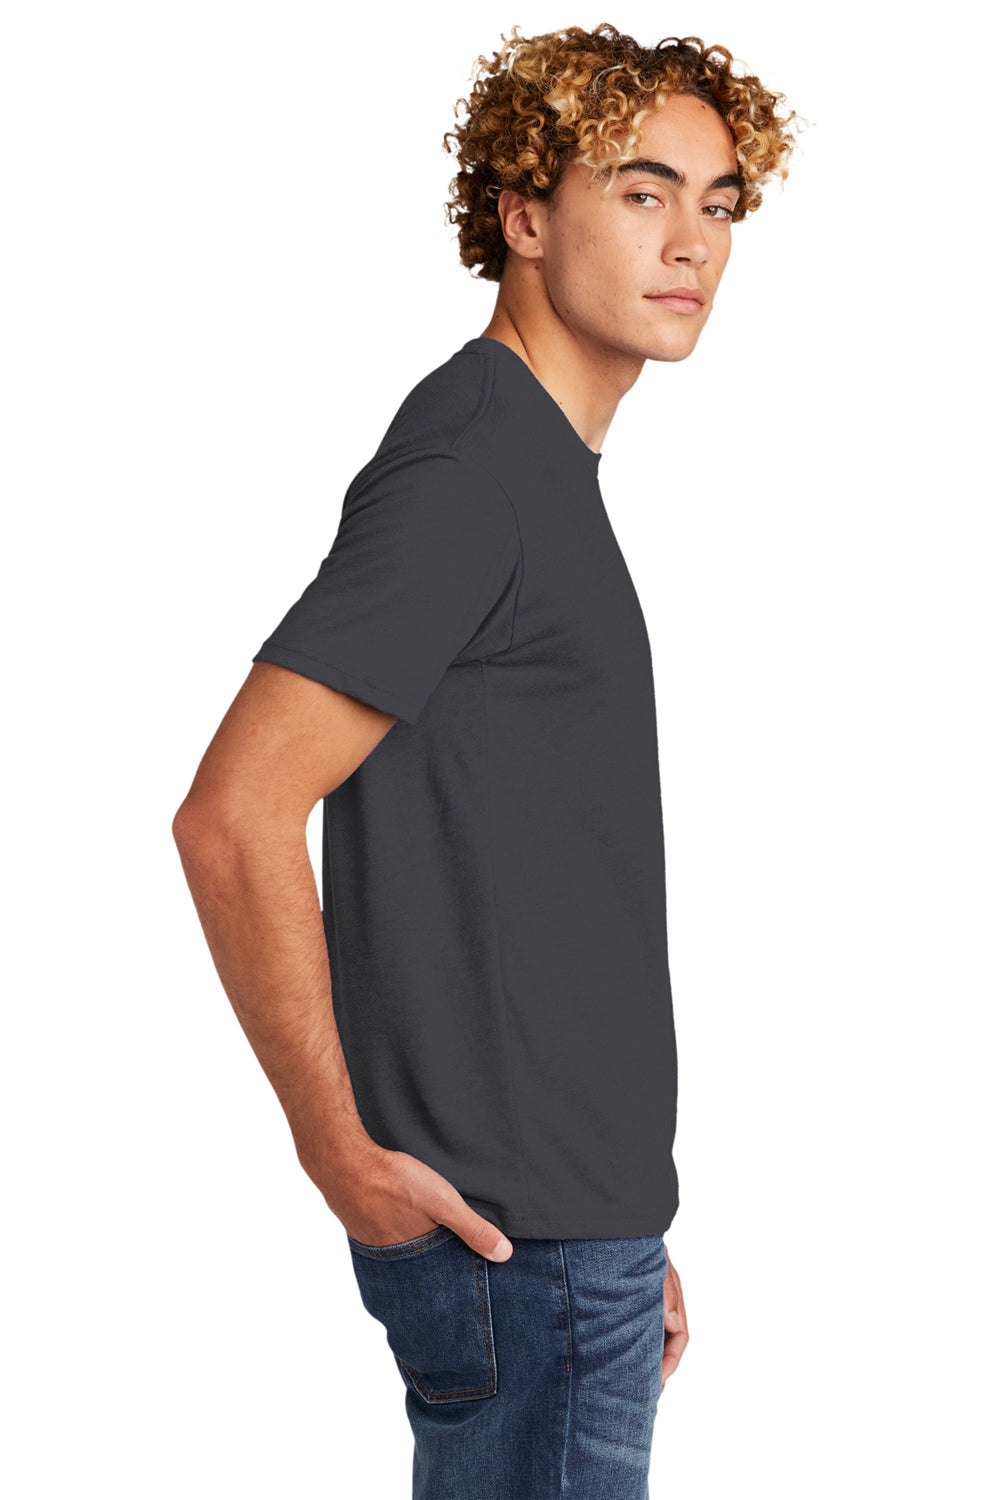 Next Level NL6010/6010 Mens Jersey Short Sleeve Crewneck T-Shirt Graphite Grey Side